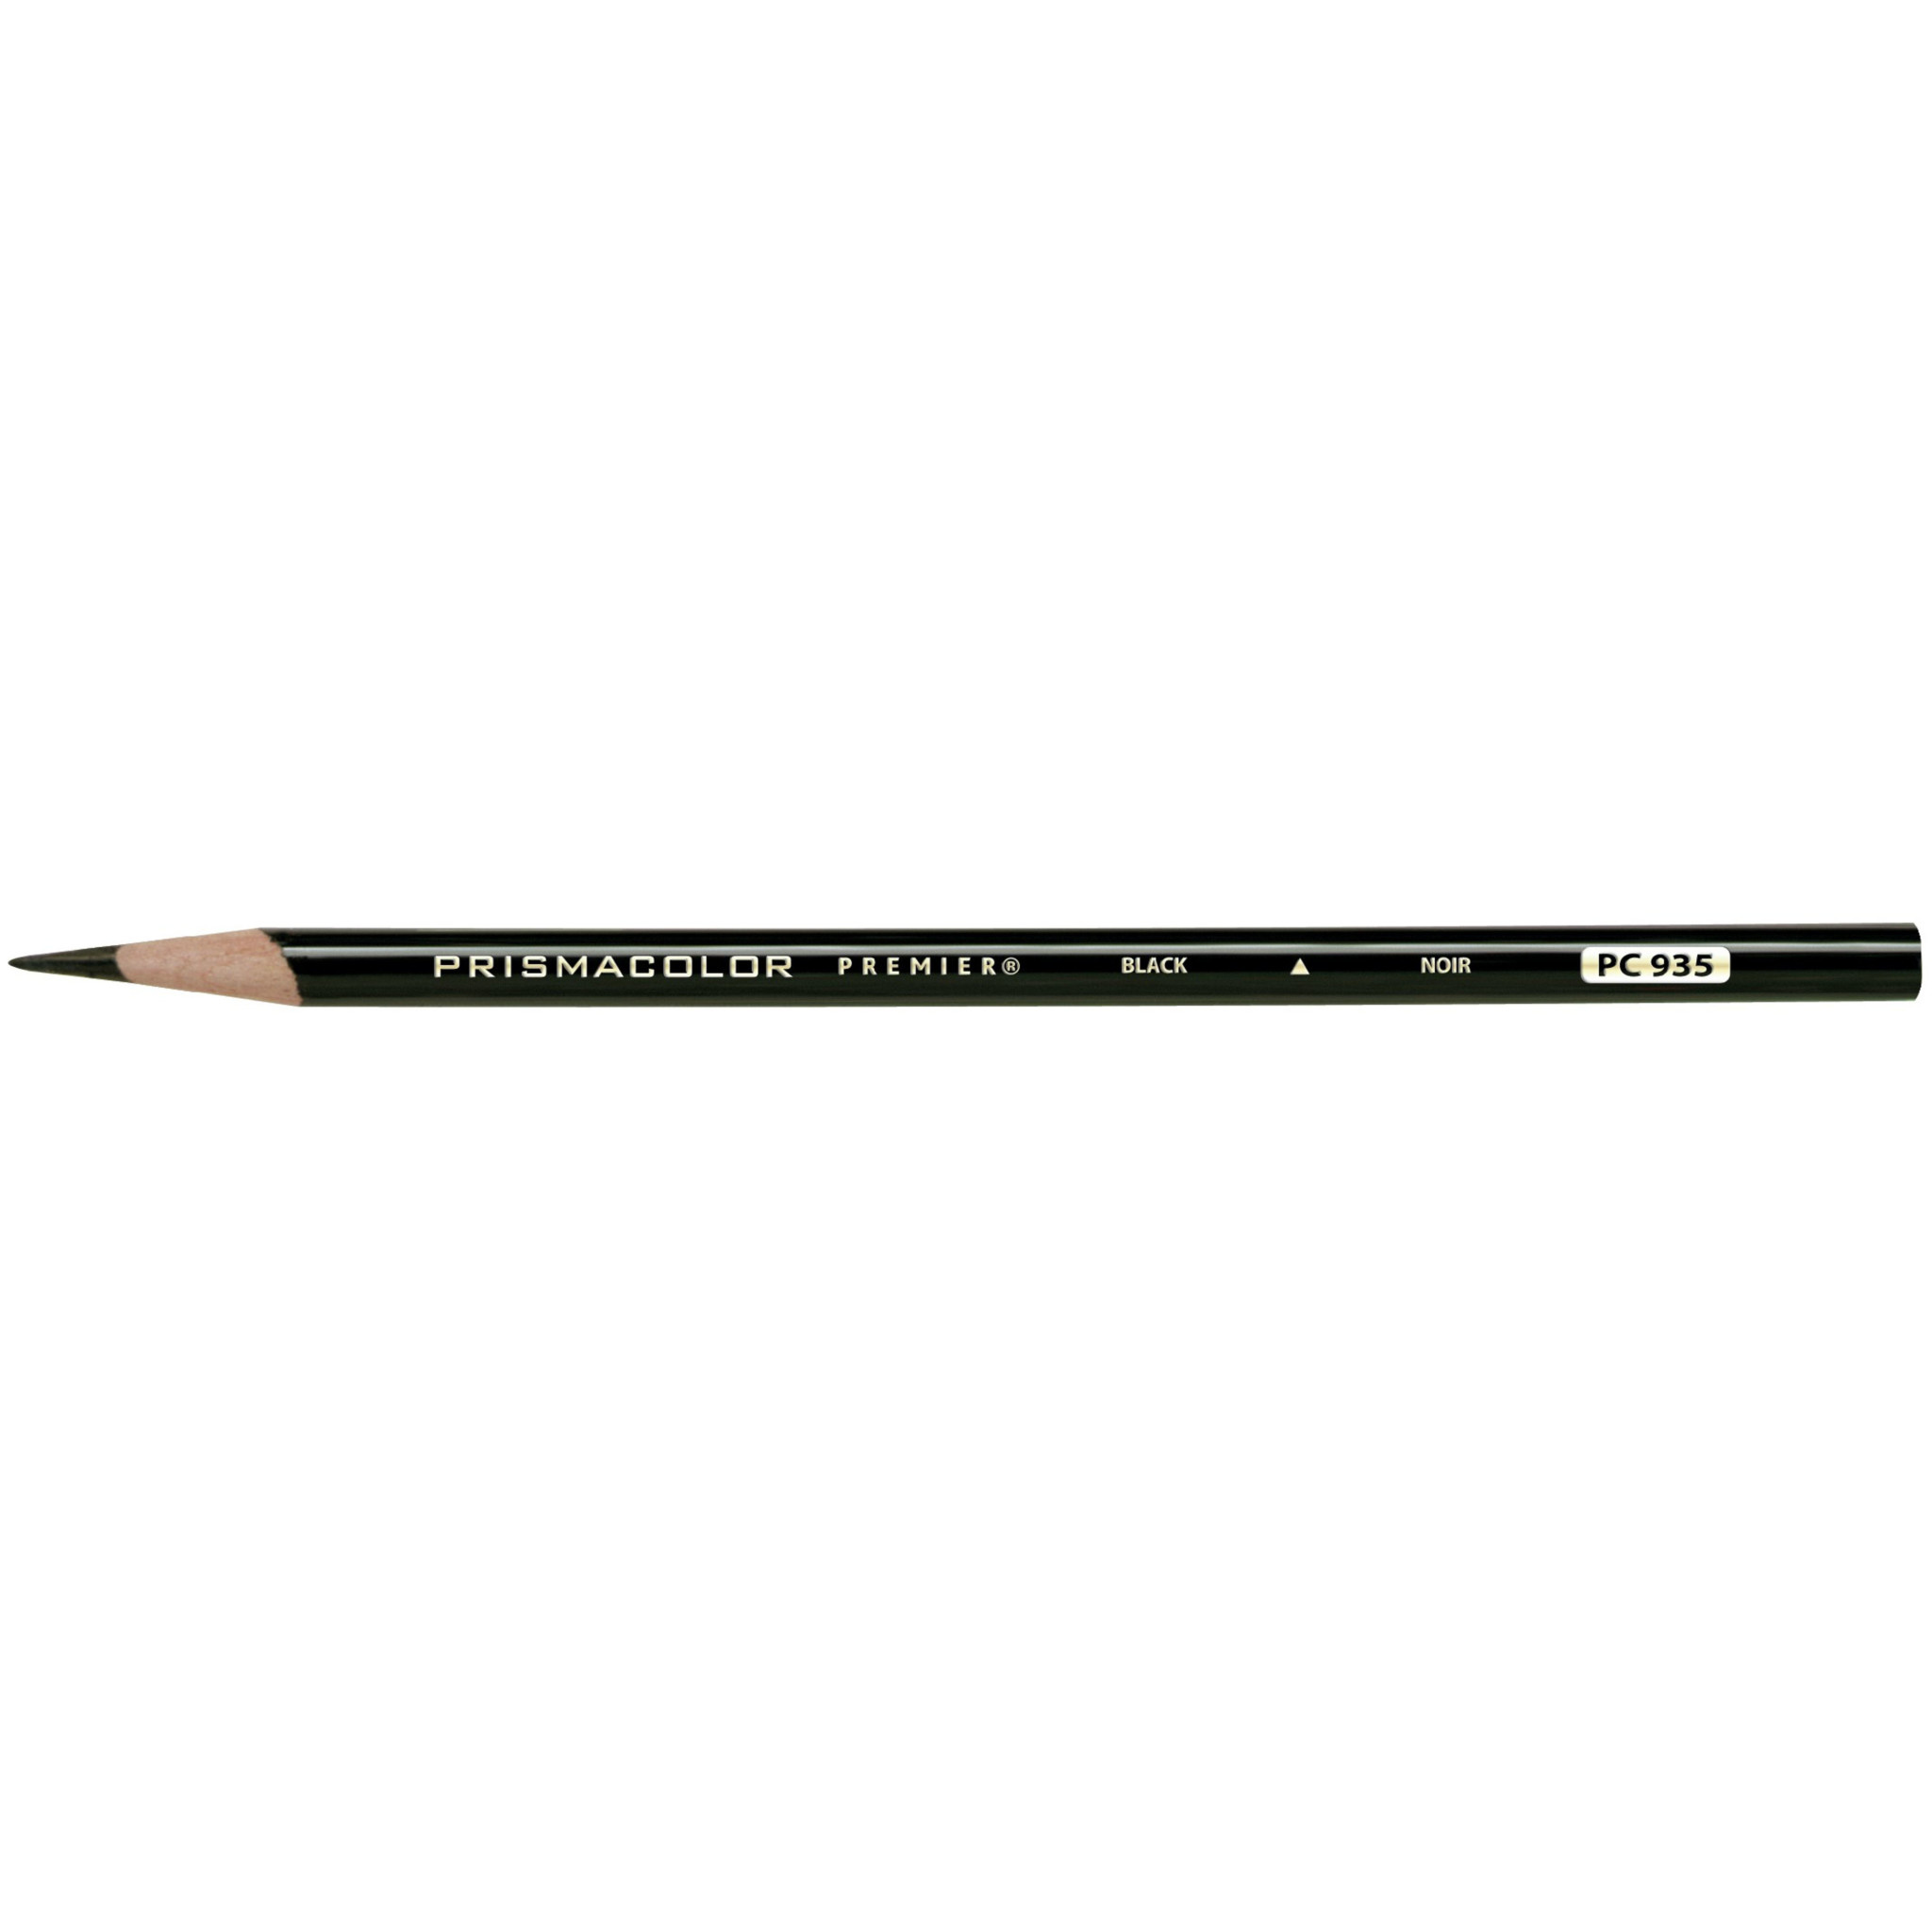 White prismacolor pencil ID Industrial Design sketch on black